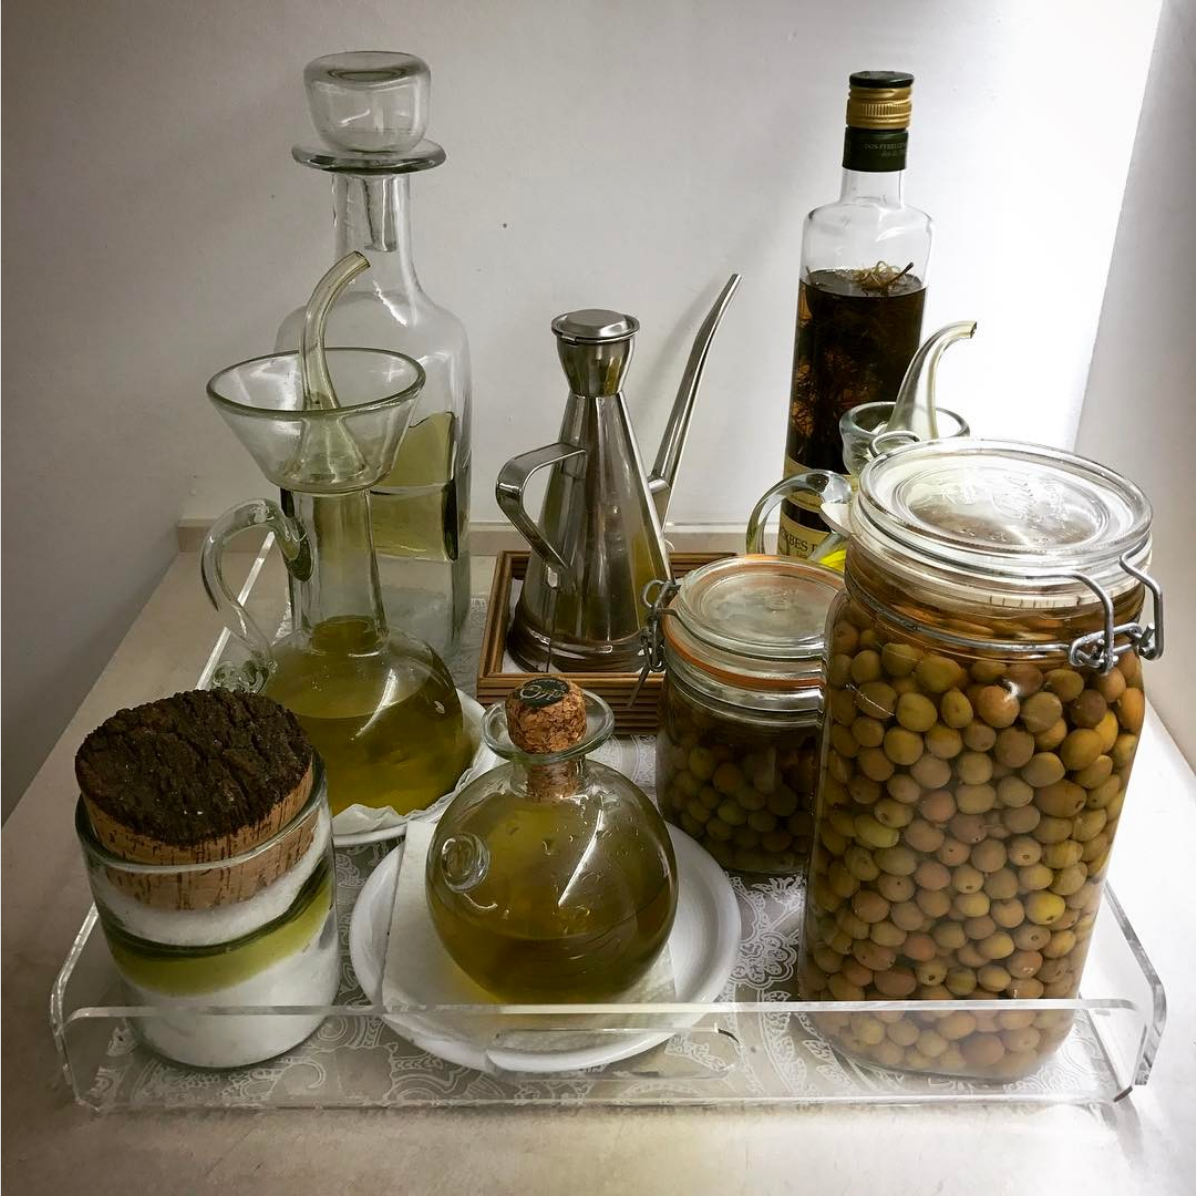 Miquel's Organic Olive Oil